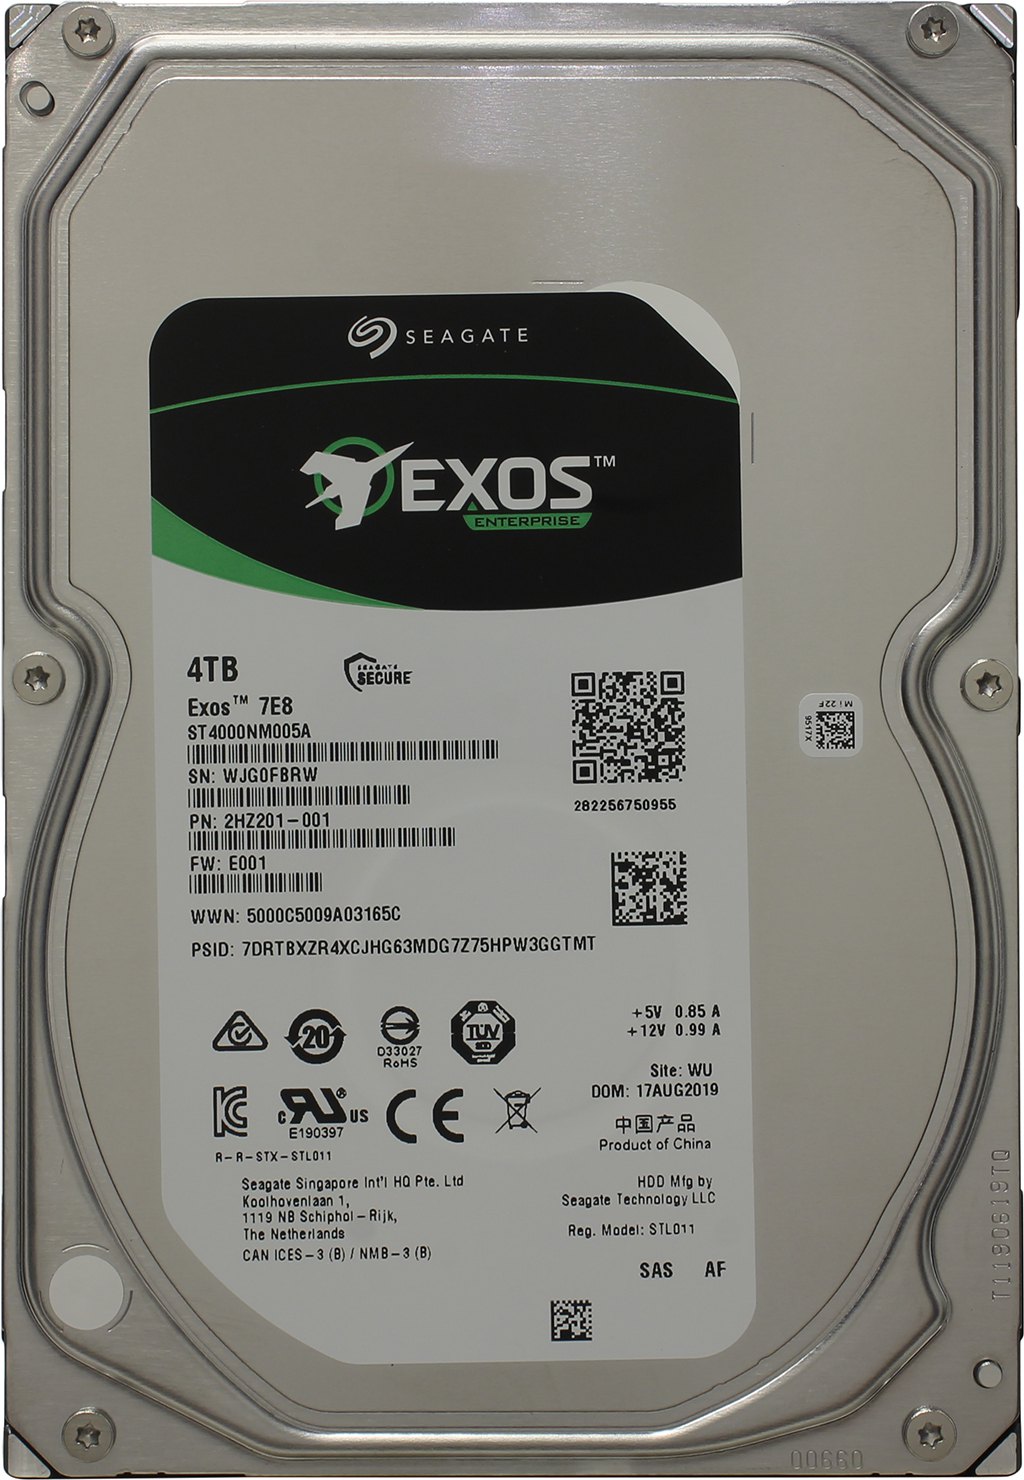 Жесткий диск Seagate 3.5" 4TB Exos 7E8 ST4000NM005A SAS 12Gb/s, 7200rpm, 256MB, 512e, Bulk {20}